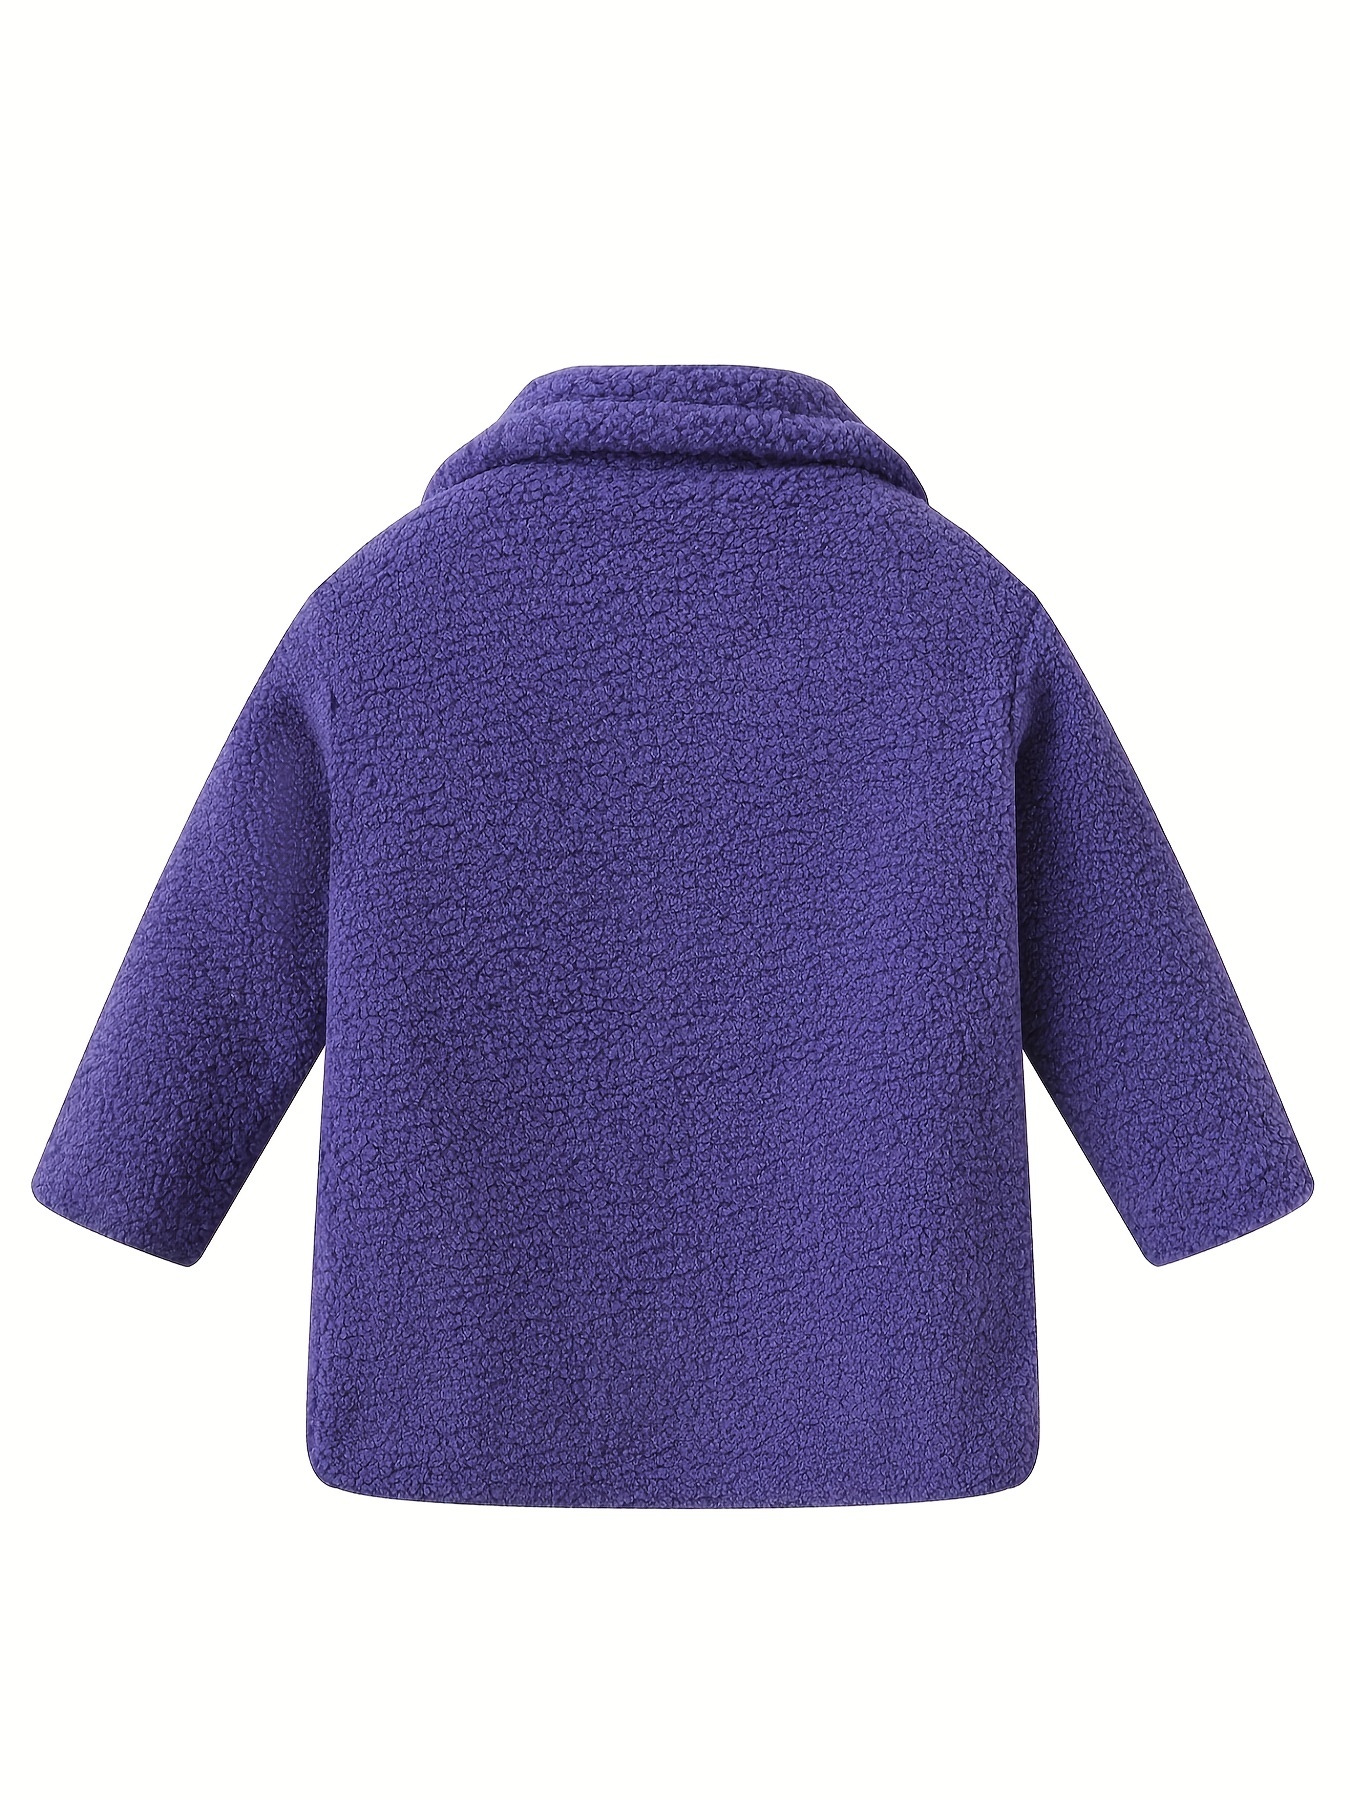 Girls Lamb Fleece Jacket Fashion Thickened Warm Tops Teenager Winter New  Cotton Outerwear Wool Sweater Hoodid Coat 8 10 12 14 Y